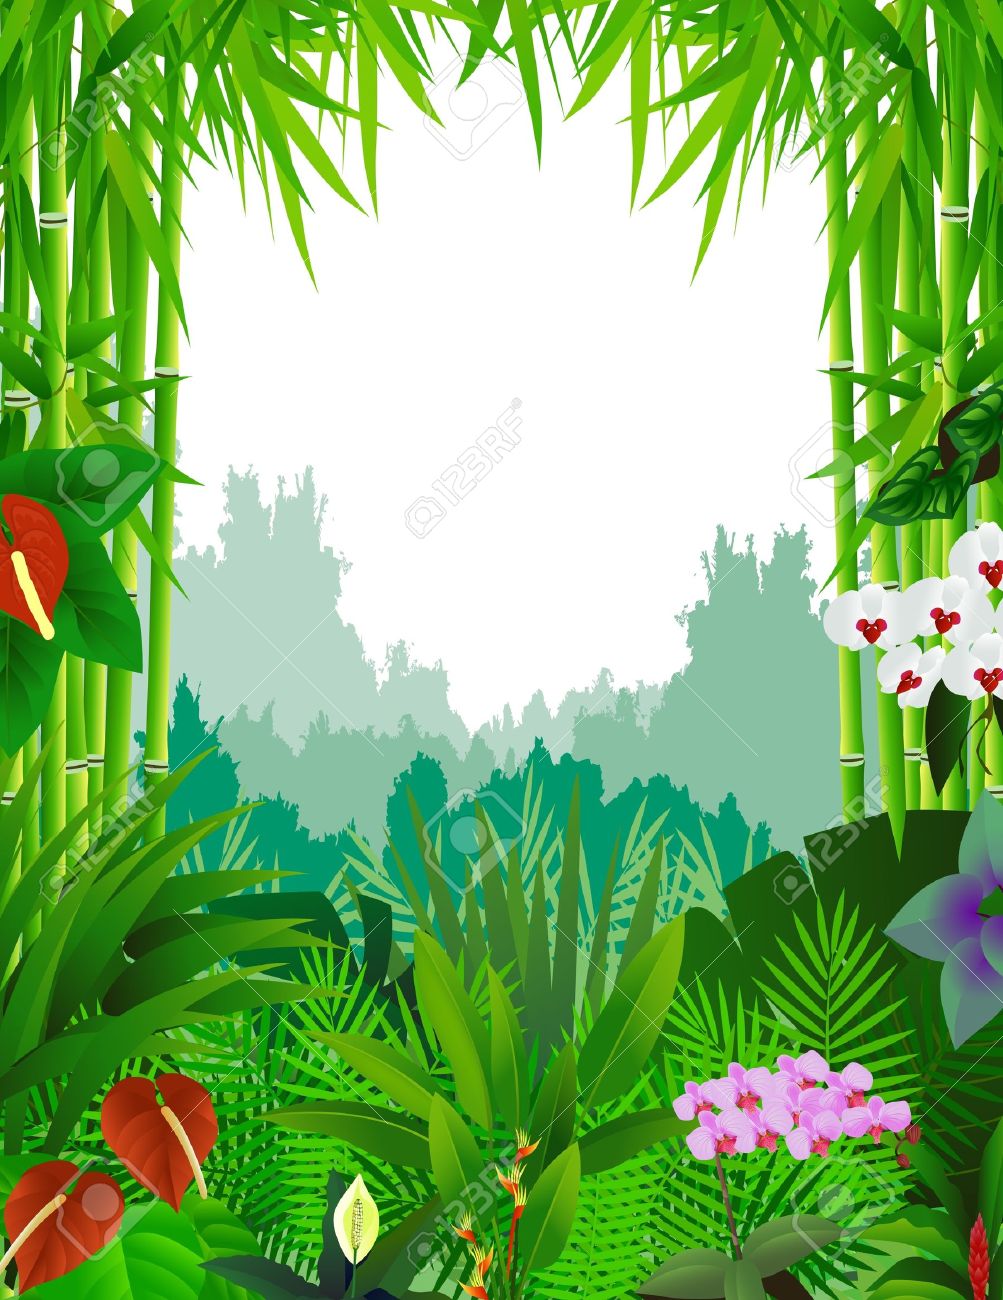 rainforest clipart nature background